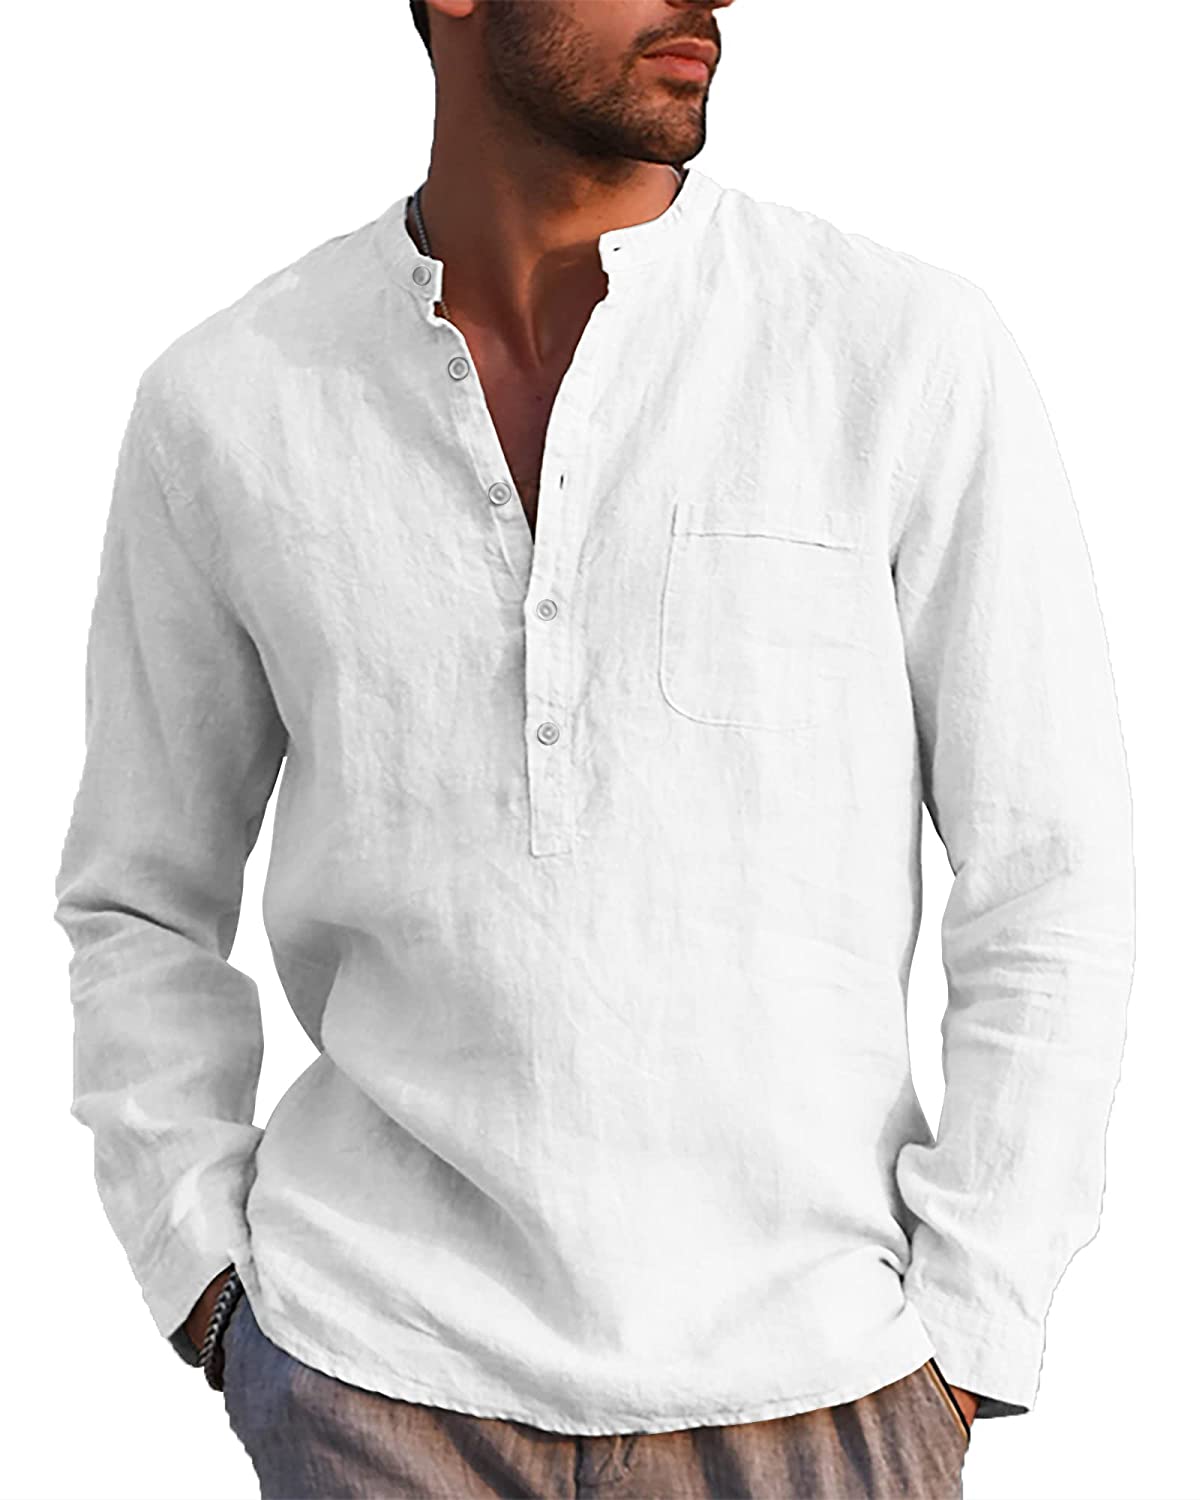 LVCBL Mens Casual Cotton Shirt Long Sleeve Band Collar Henley Shirt Tops